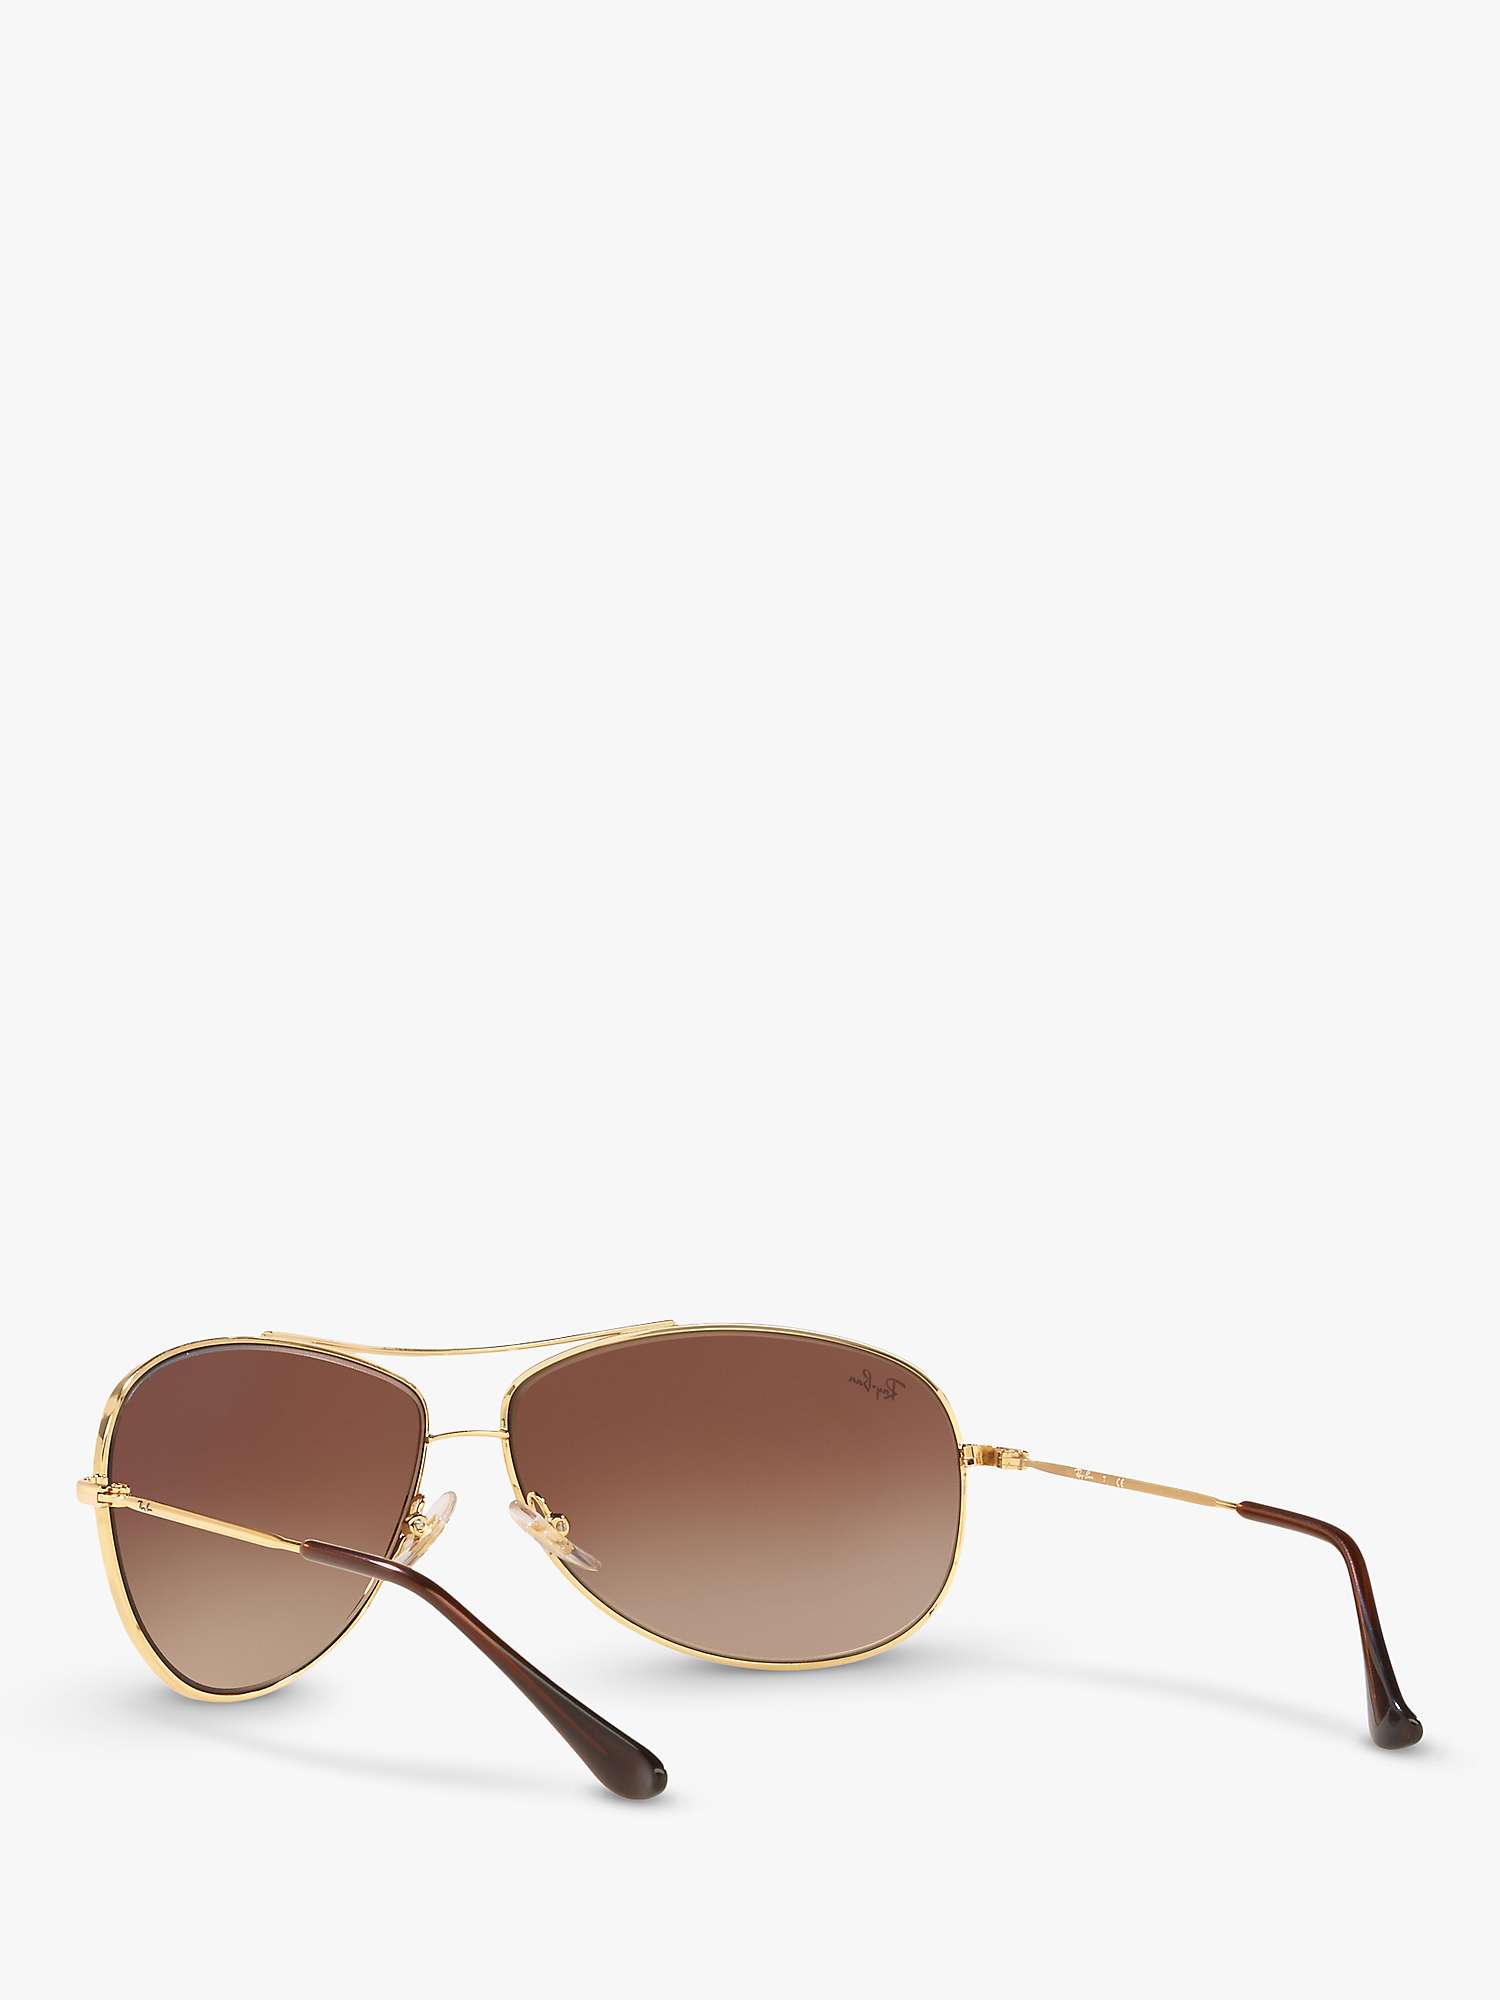 Buy Ray-Ban RB3293 Men's Aviator Sunglasses, Gold/Brown Gradient Online at johnlewis.com